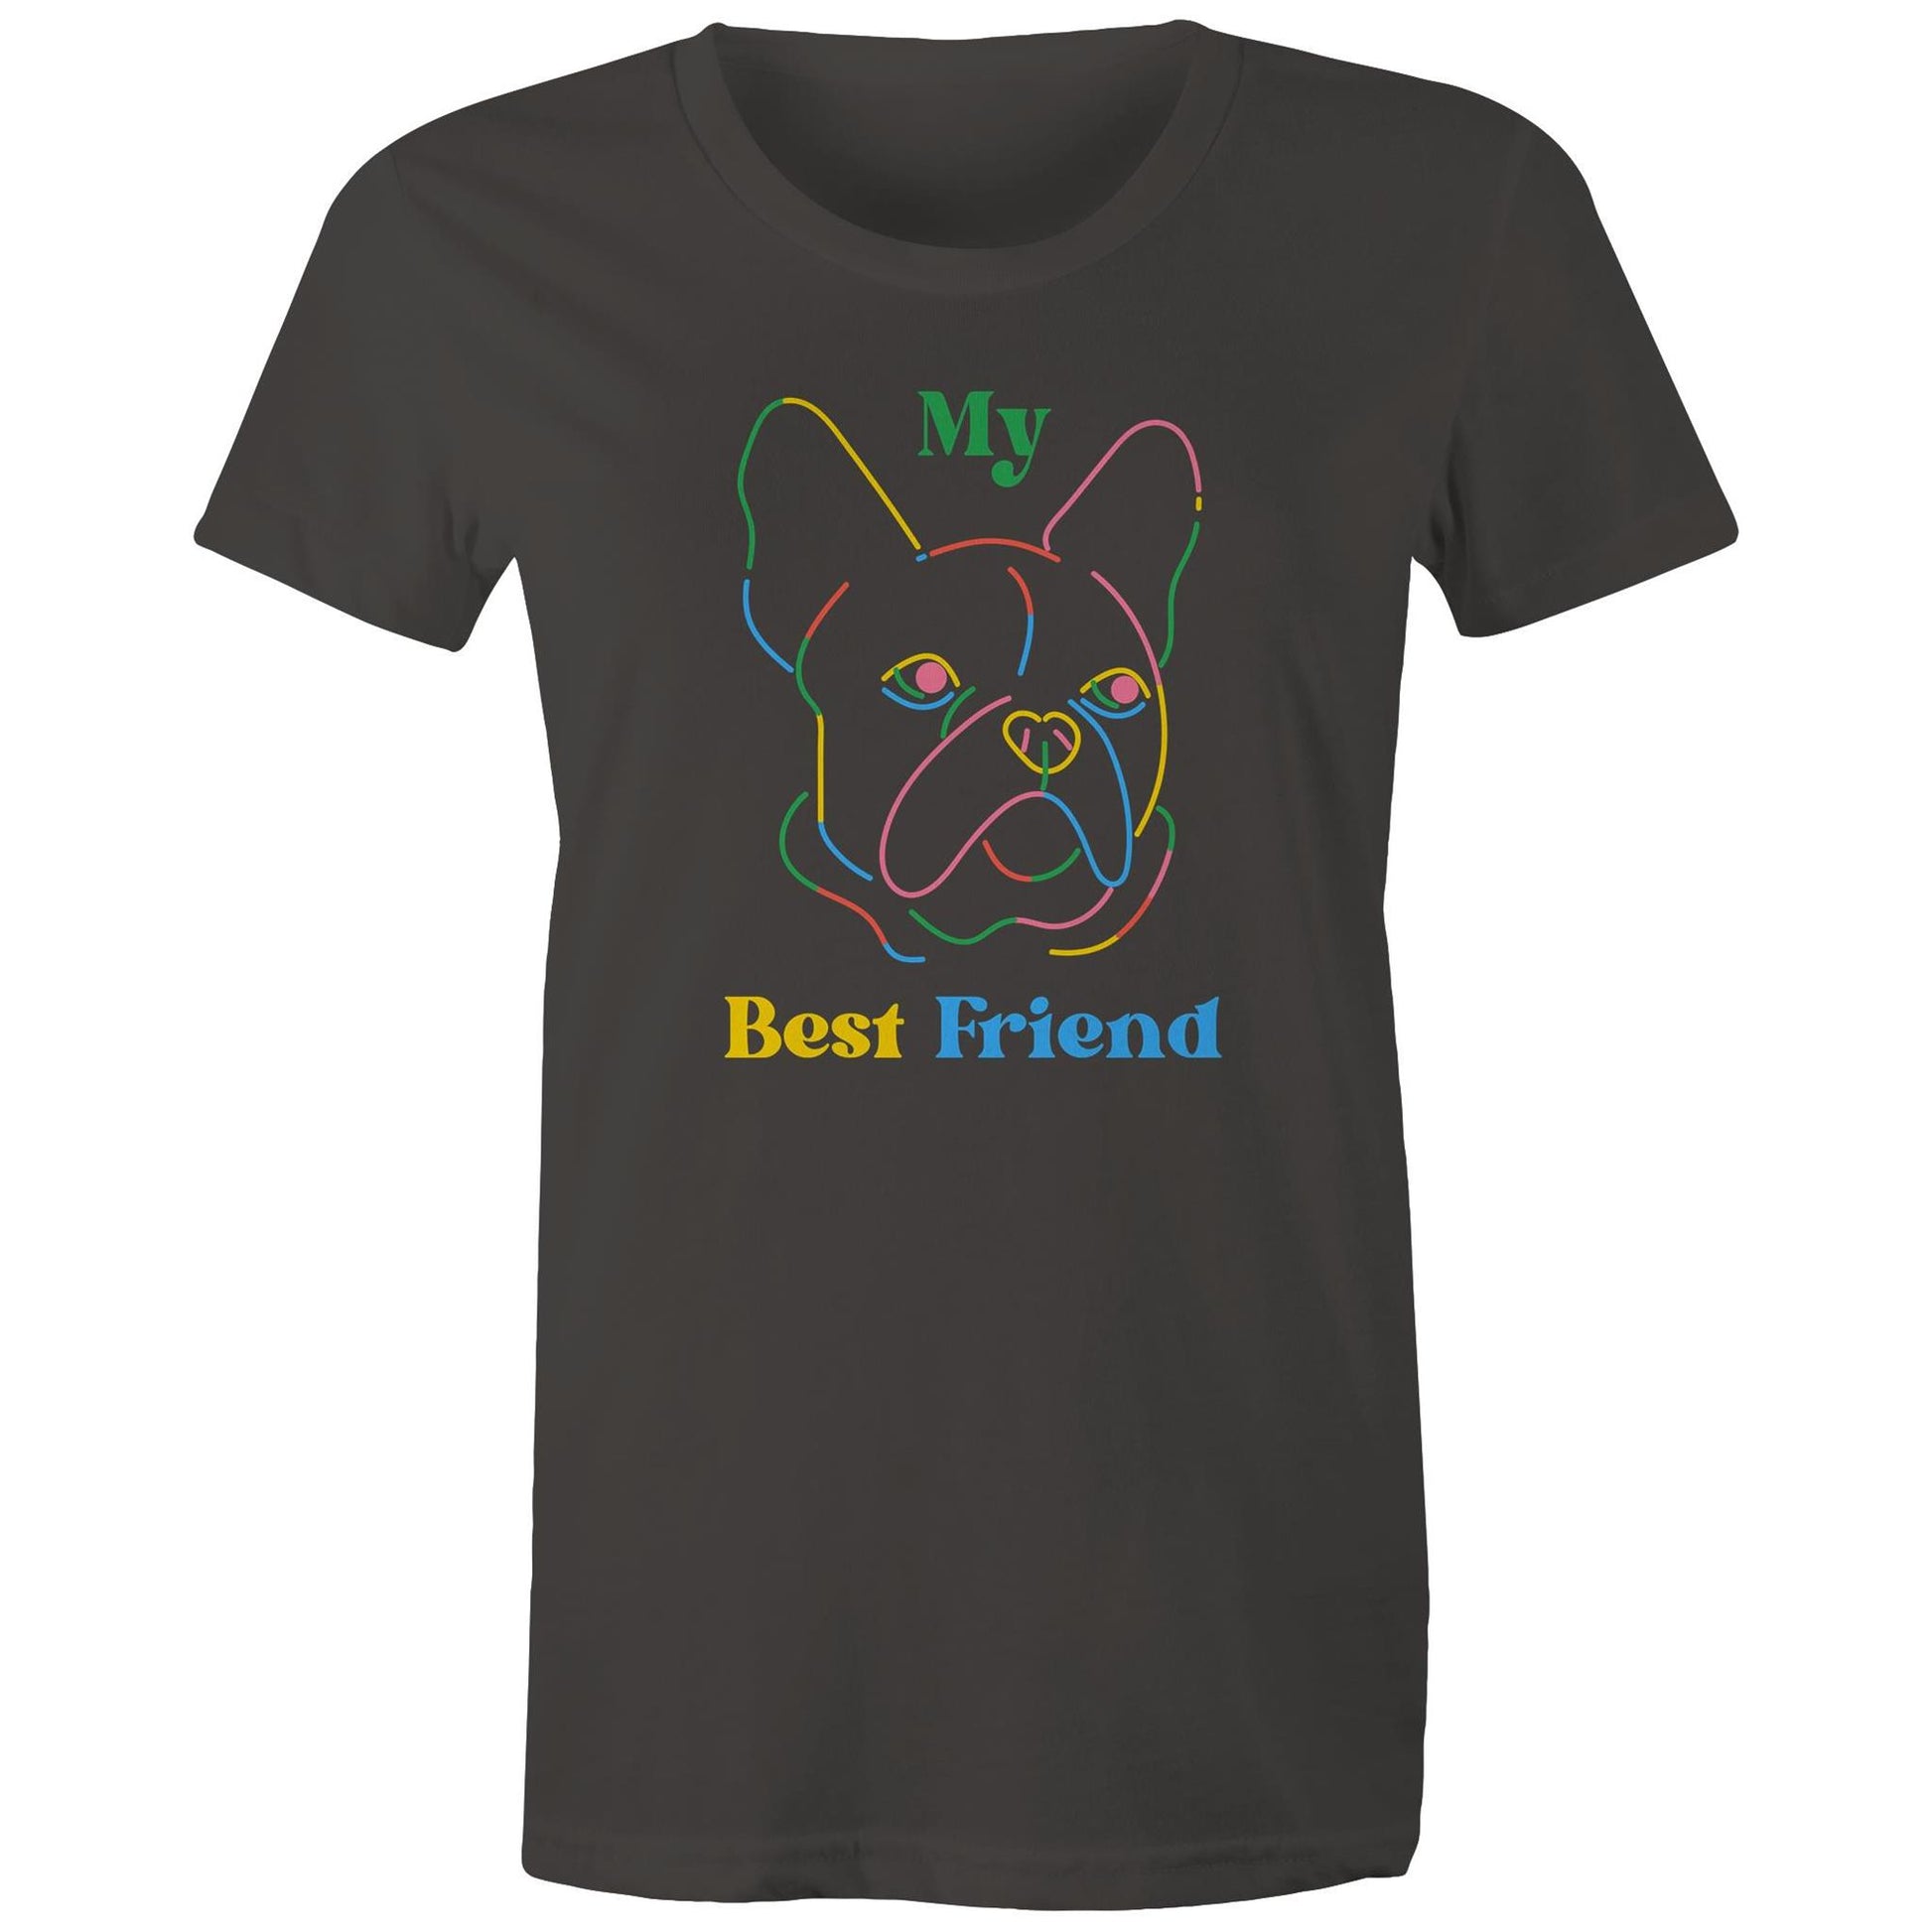 My Best Friend, Dog - Womens T-shirt Charcoal Womens T-shirt animal